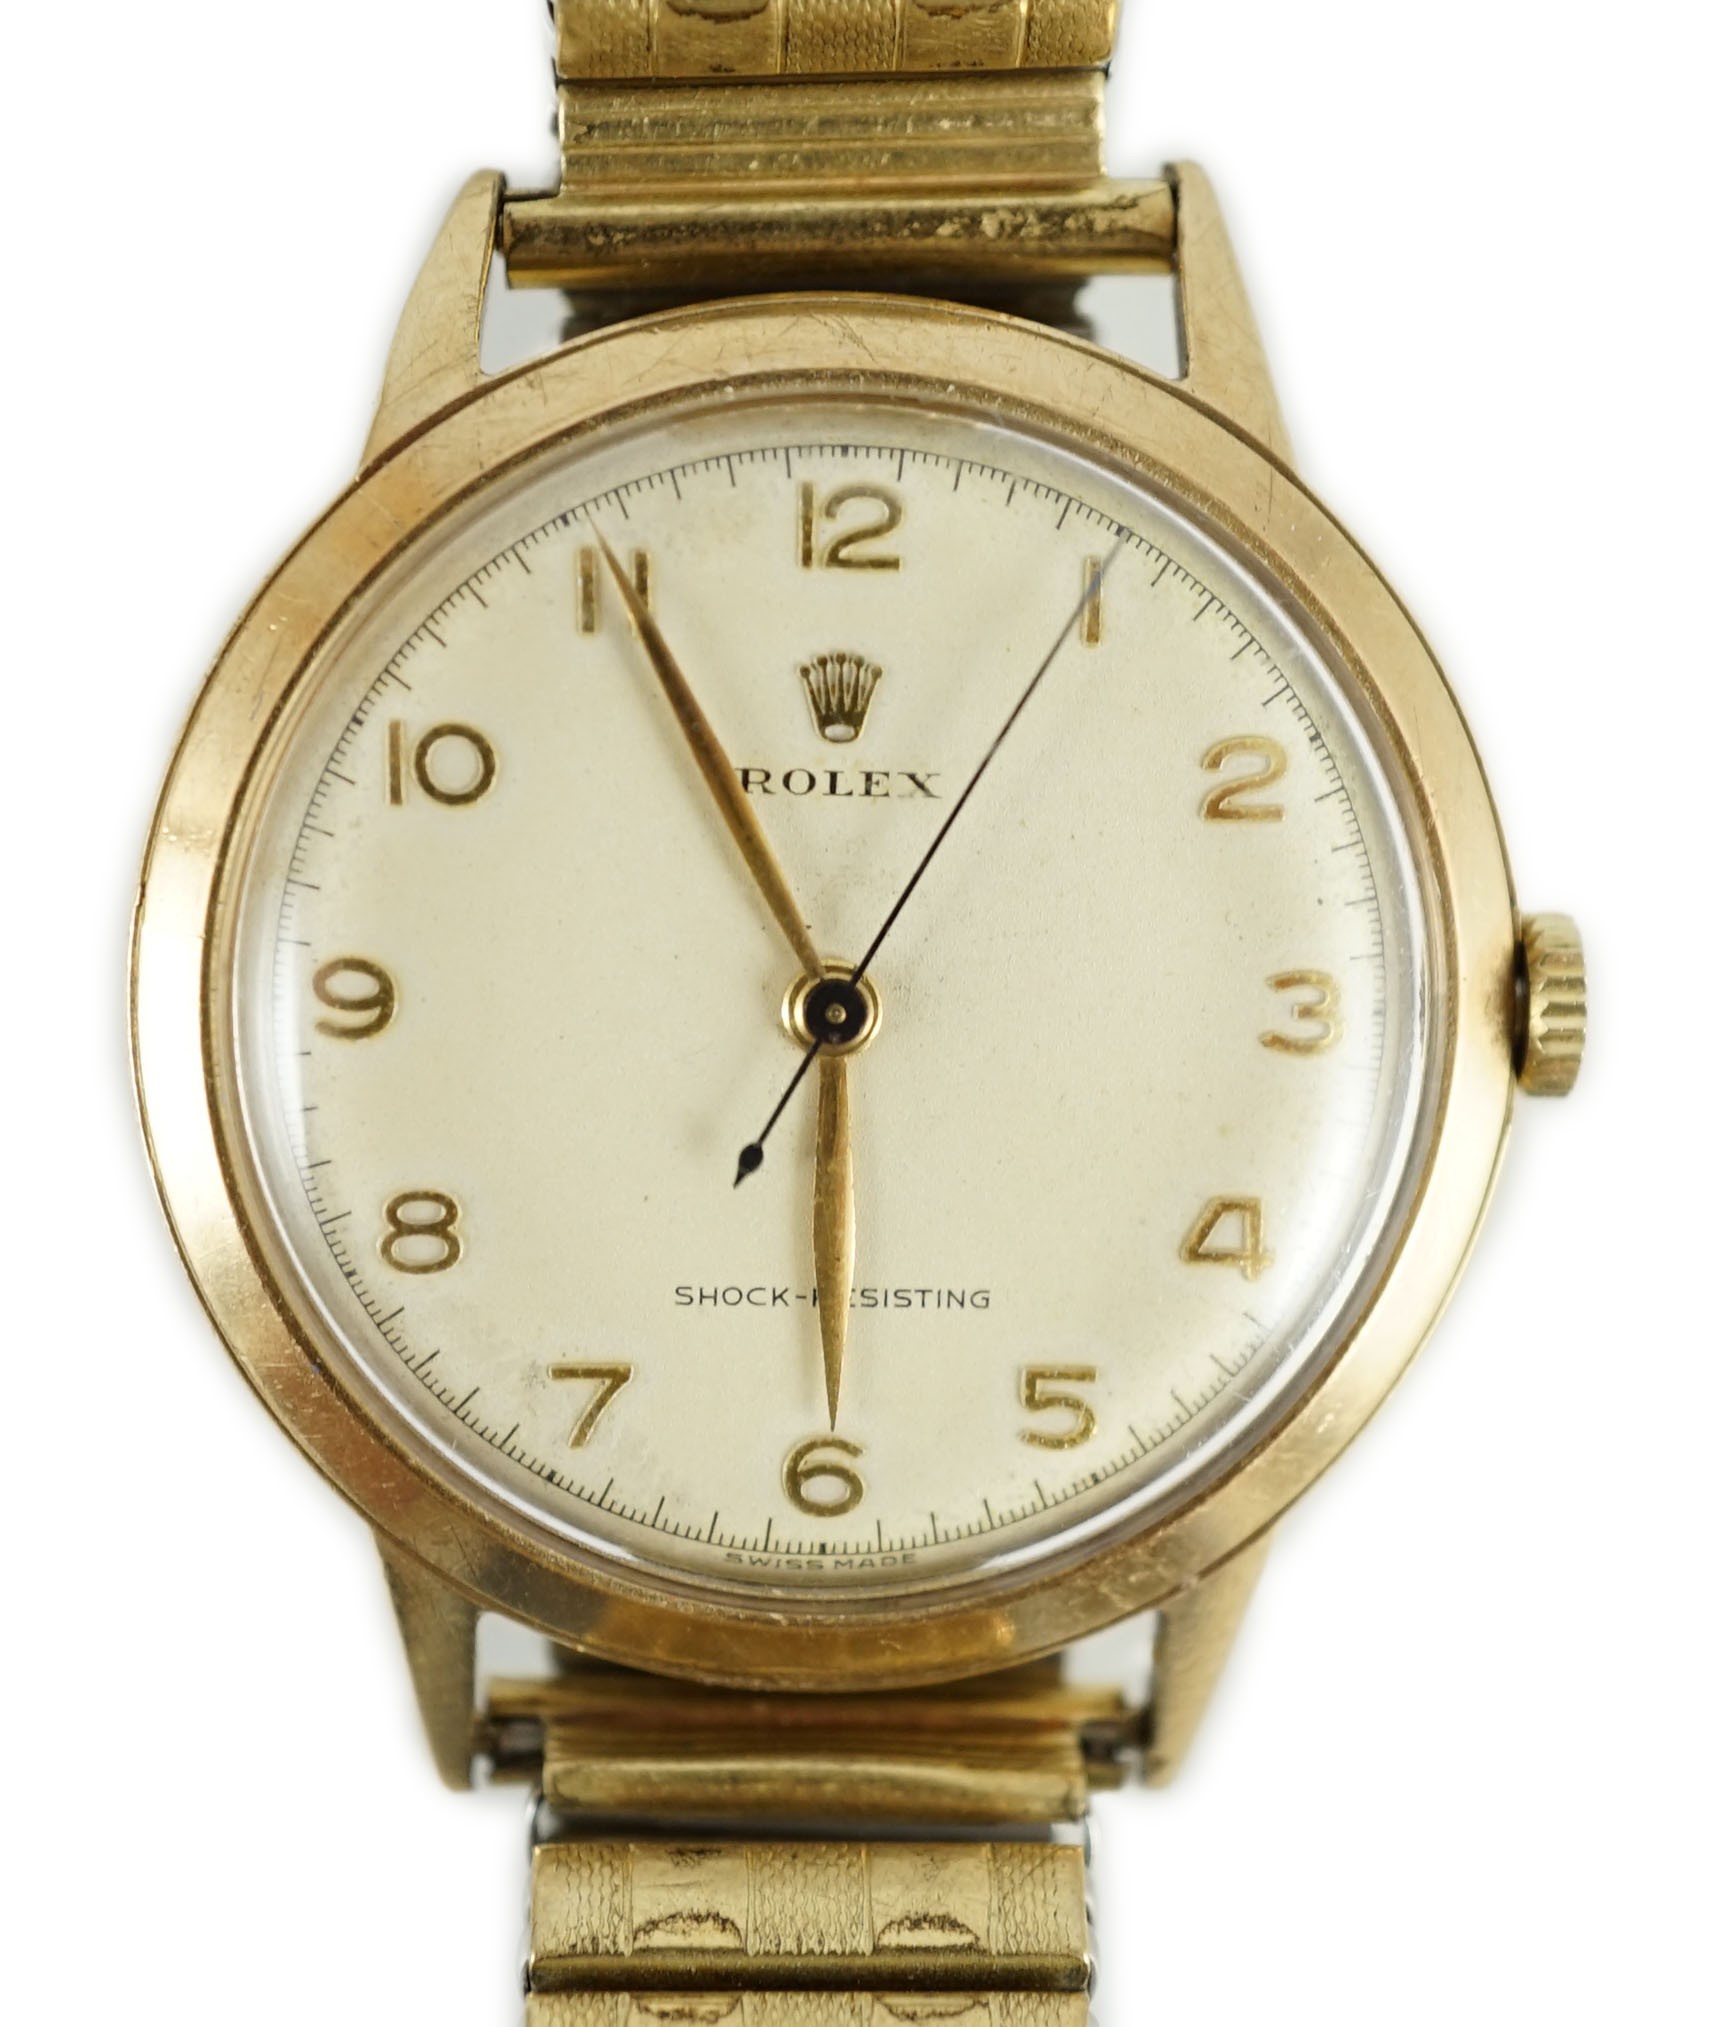 A gentleman's early 1950's 9ct gold Rolex Shock-Resisting manual wind wrist watch, on associated flexible bracelet